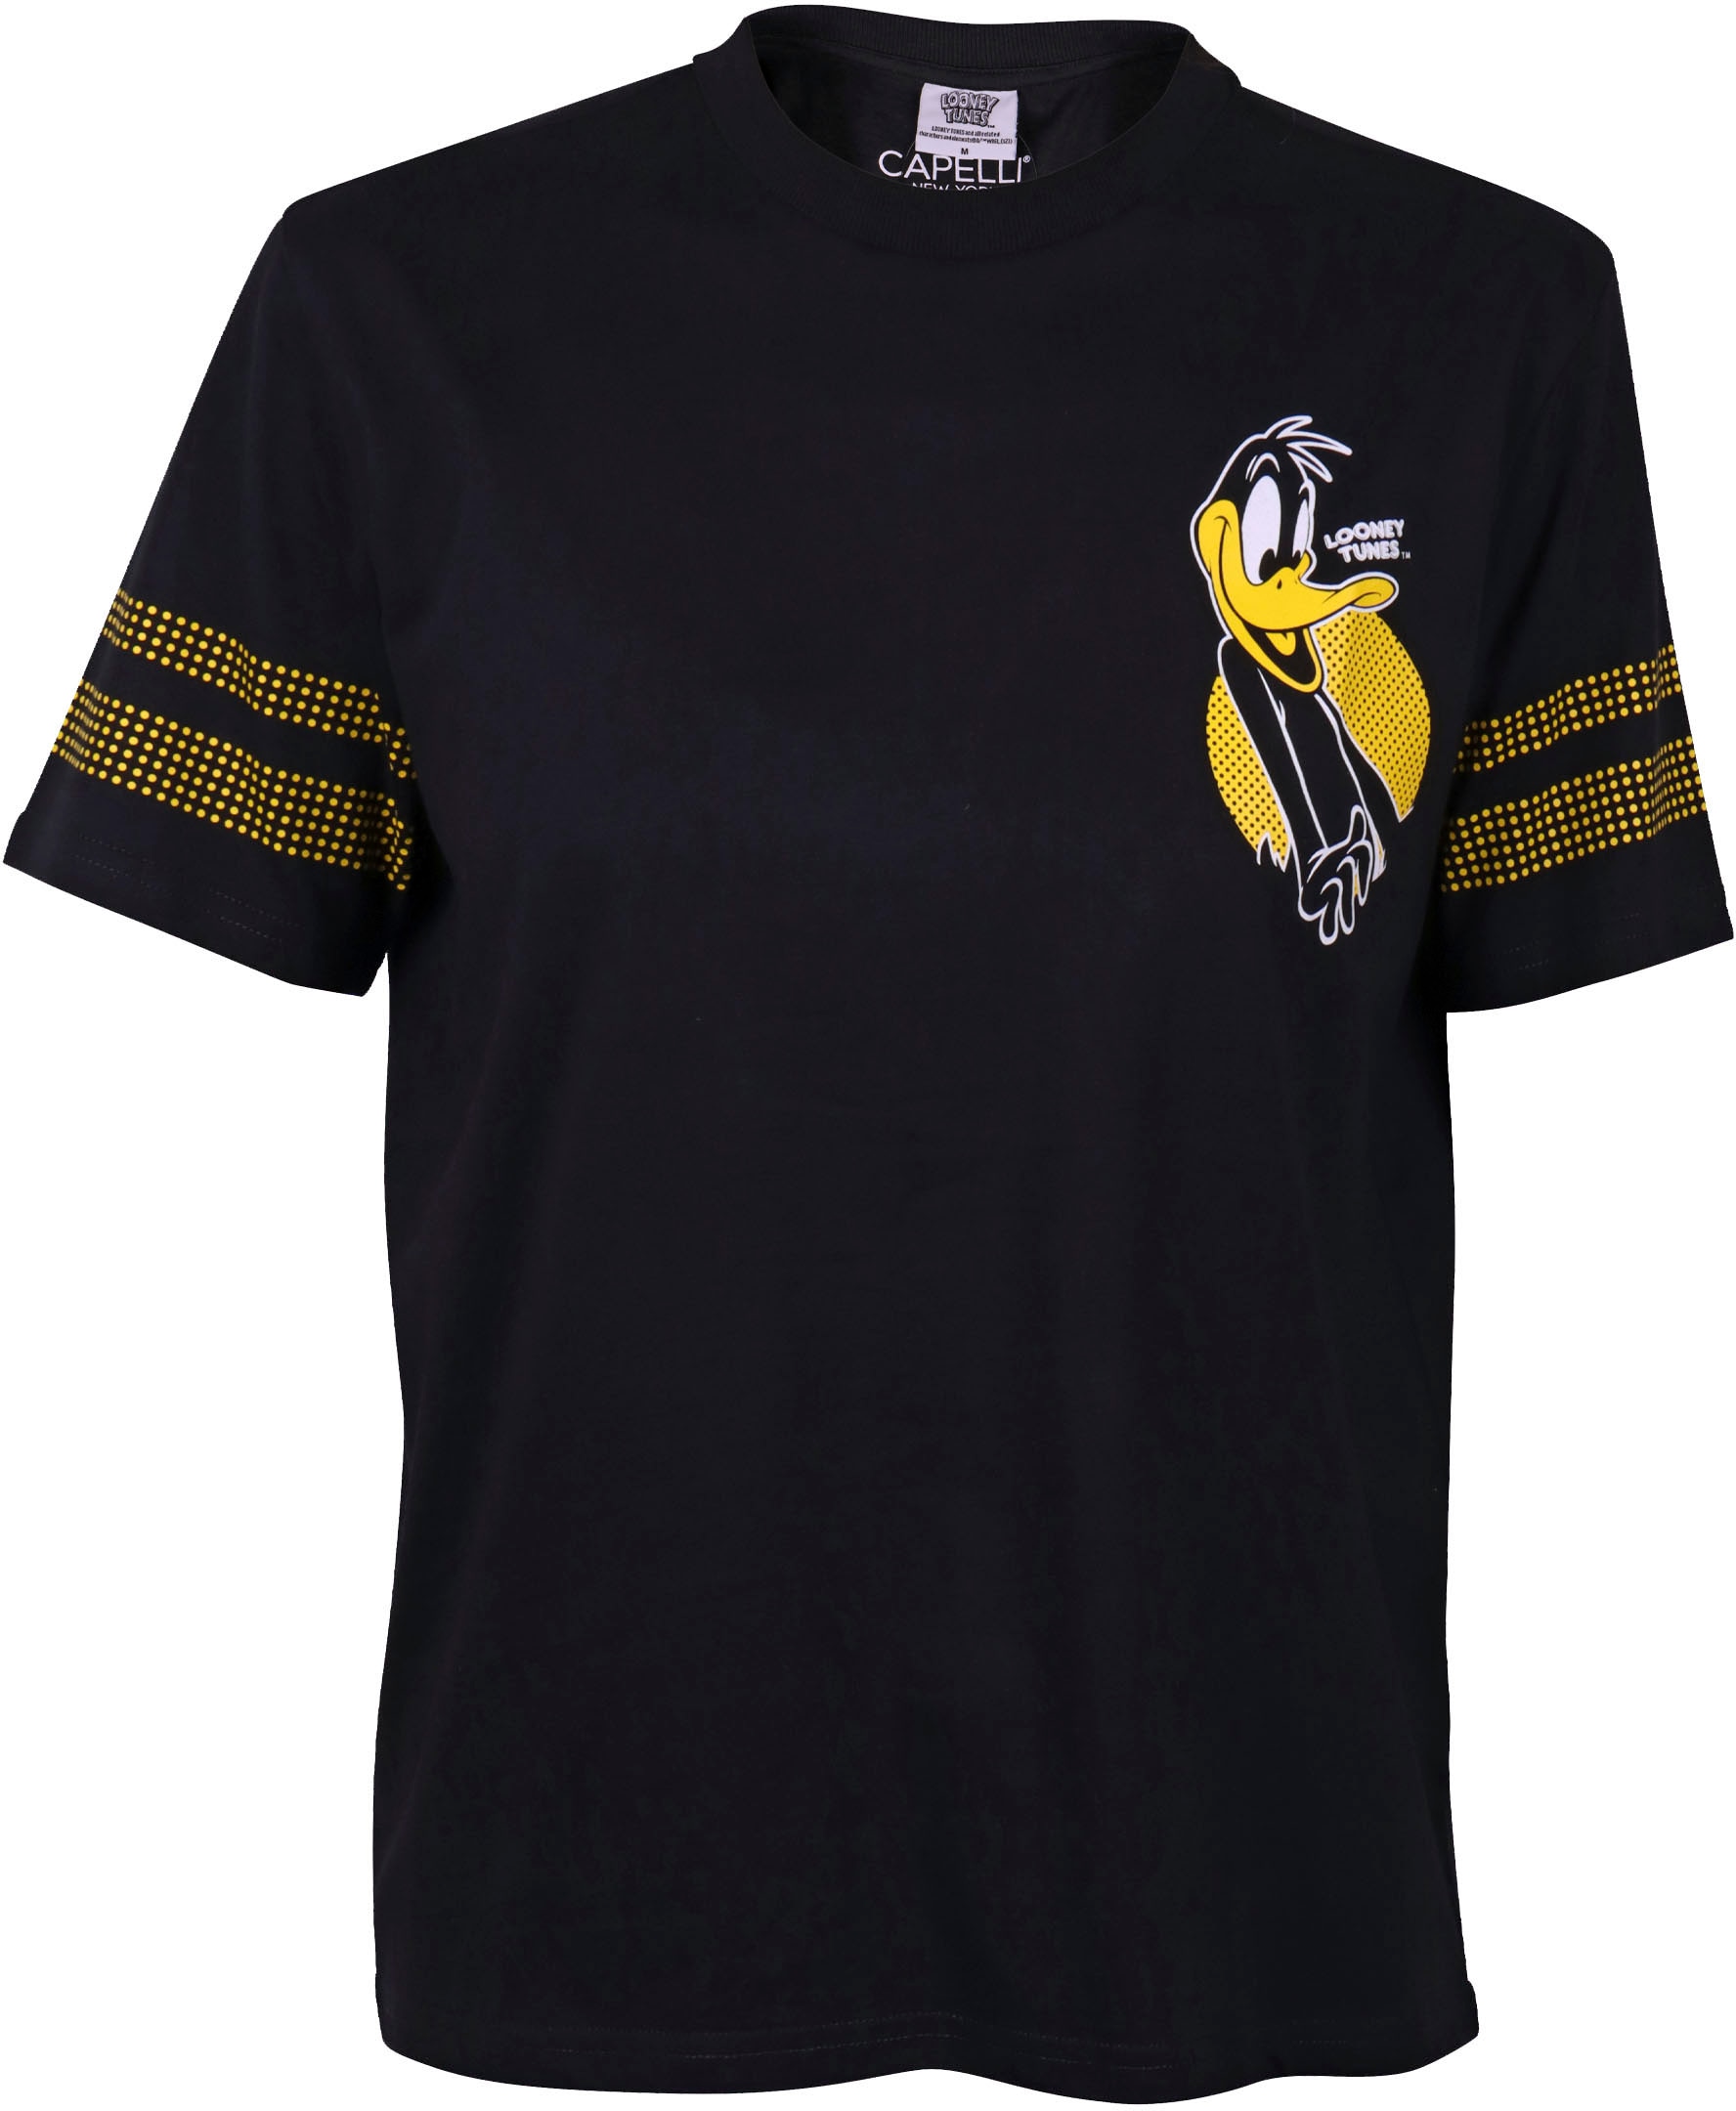 York Motiv New T-Shirt, Duck Duffy Acheter Capelli